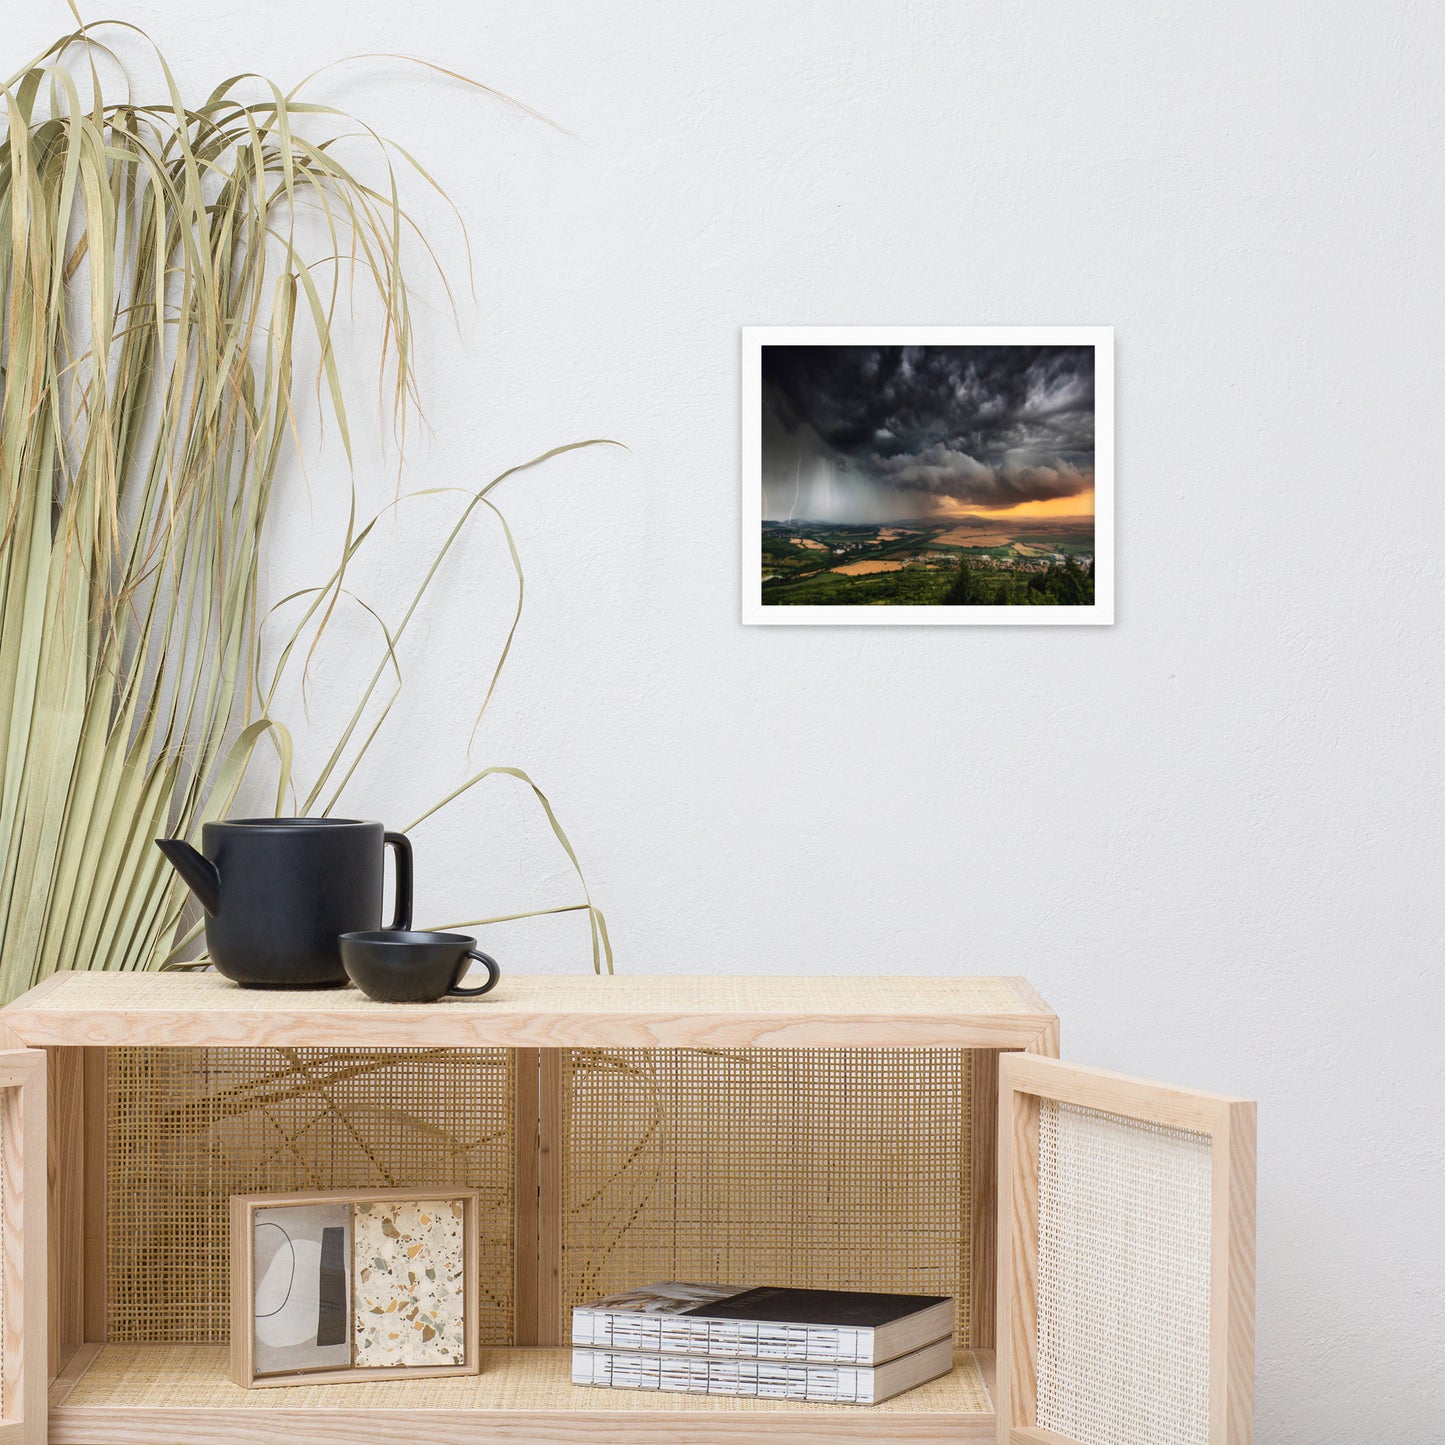 The Storm Rustic Landscape Photograph Framed Wall Art Print